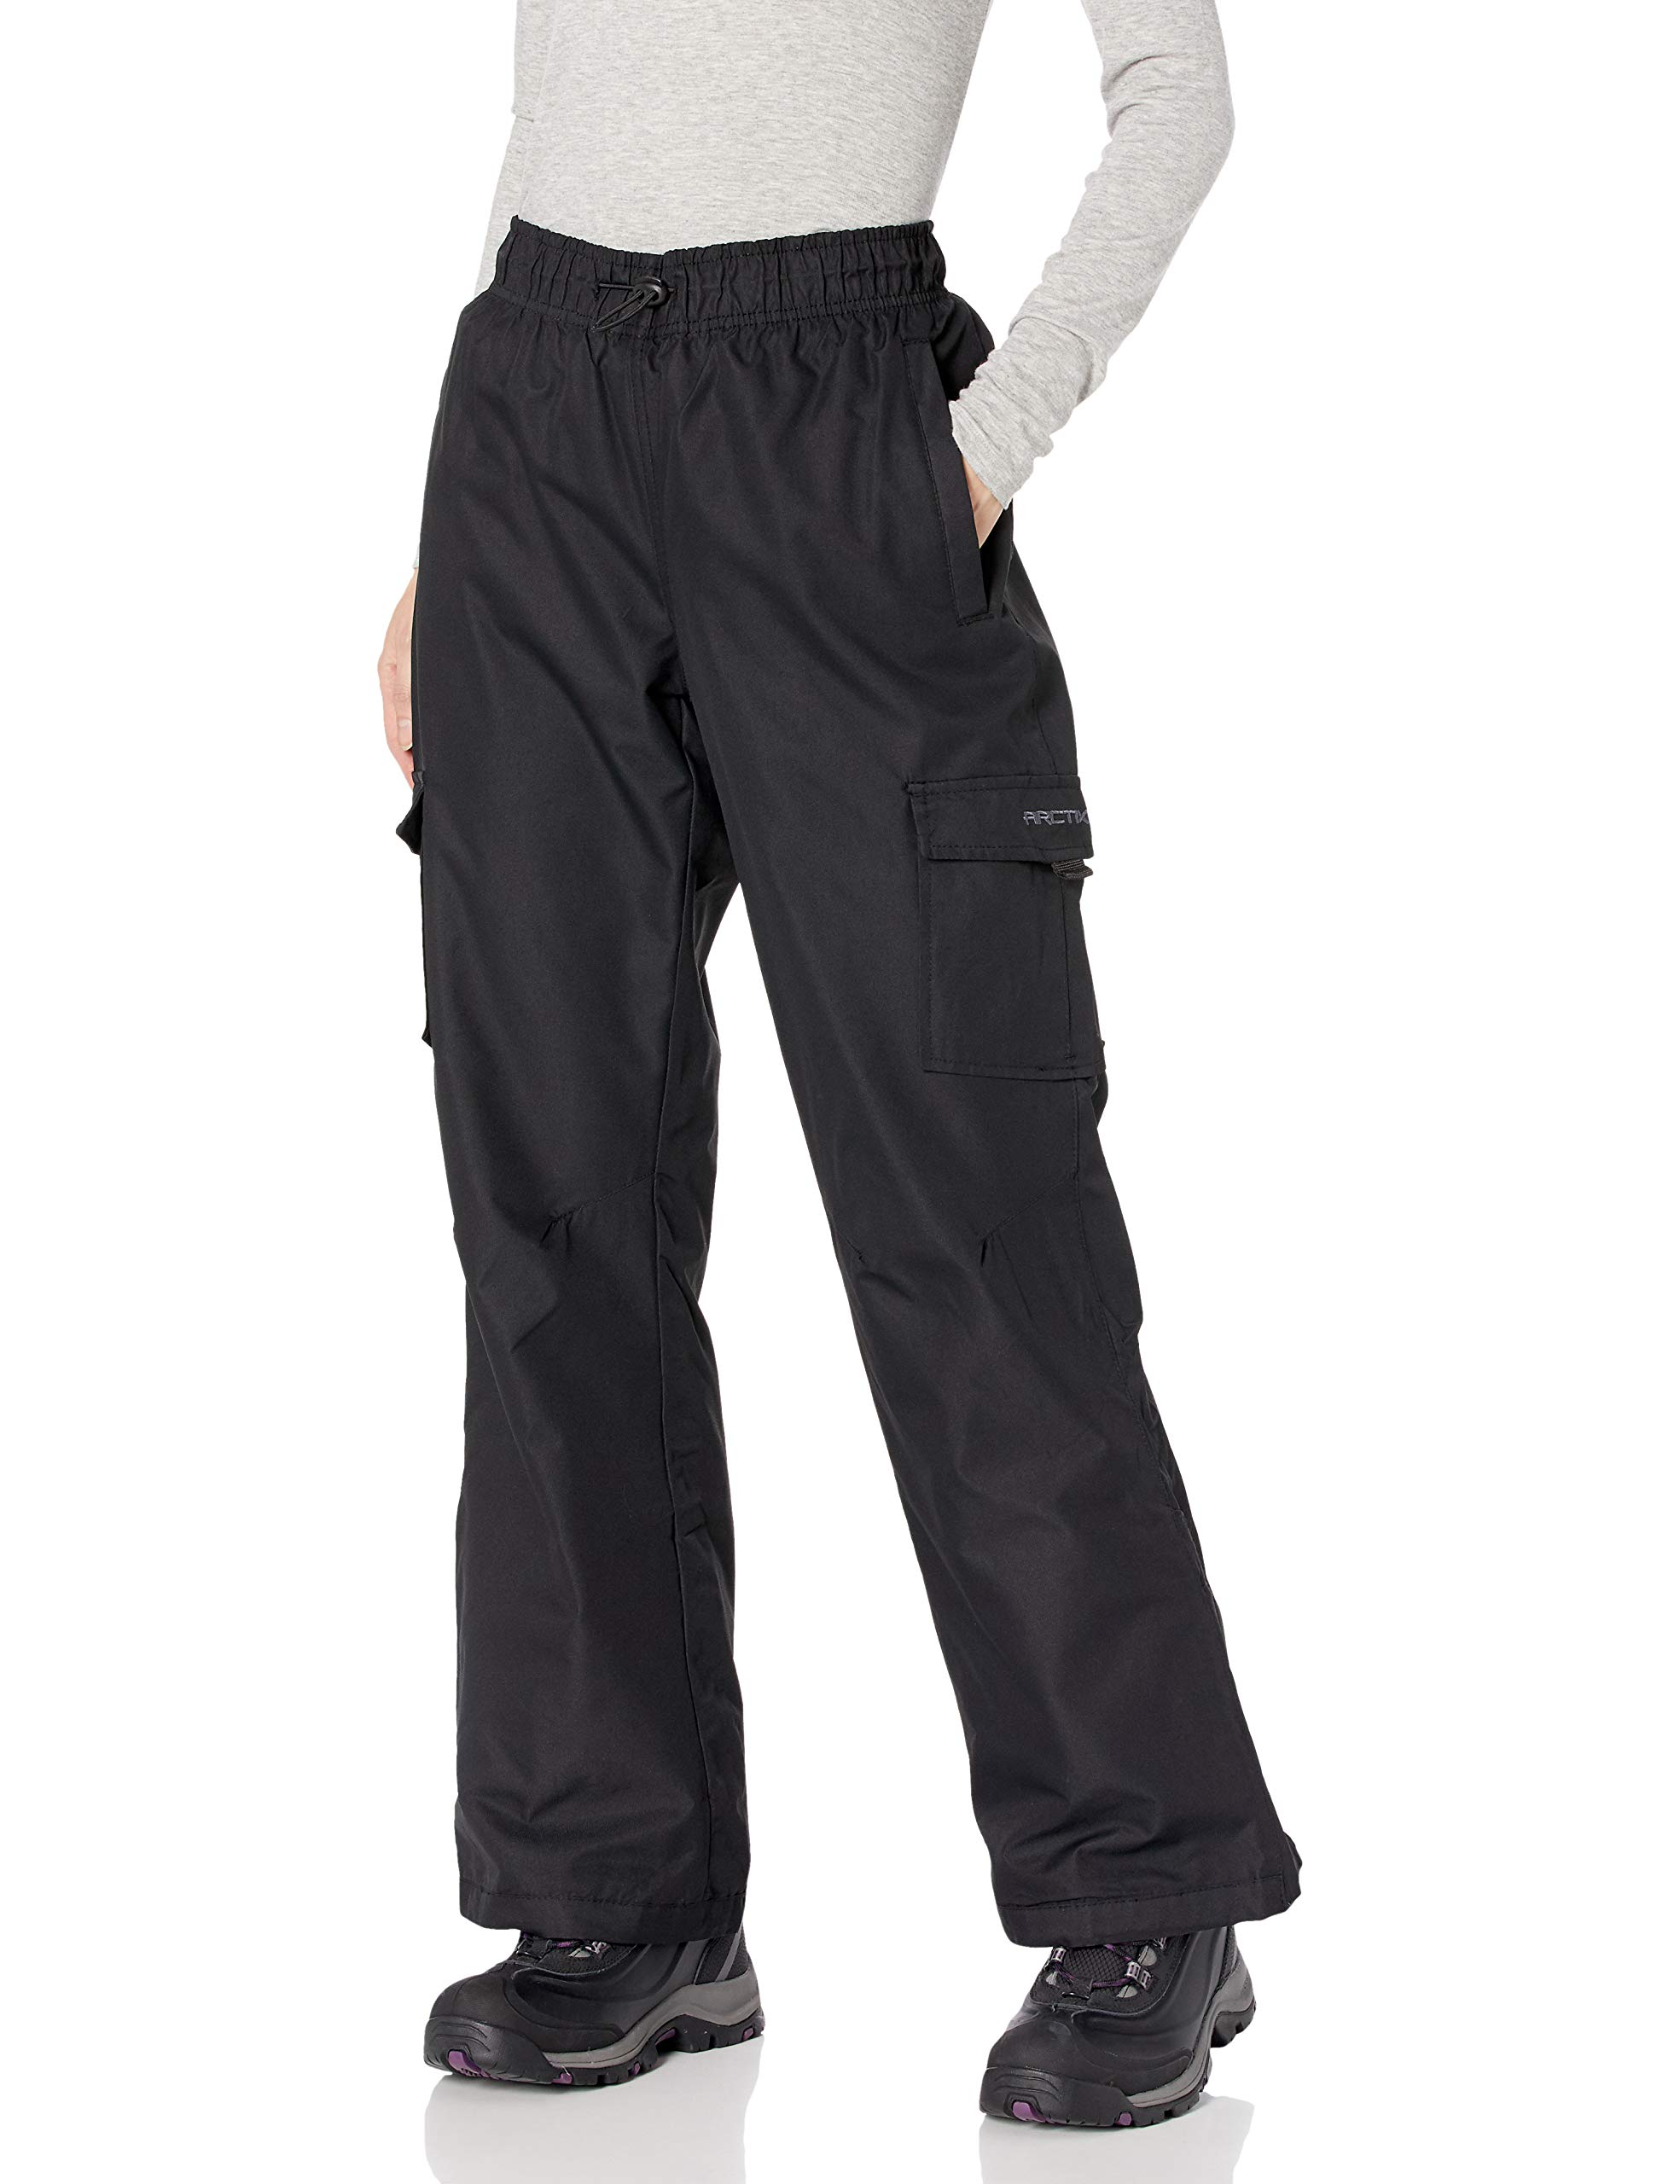 Arctix Women's Lumi Pull Over Fleece Lined Cargo Snow Pants Black X-Large